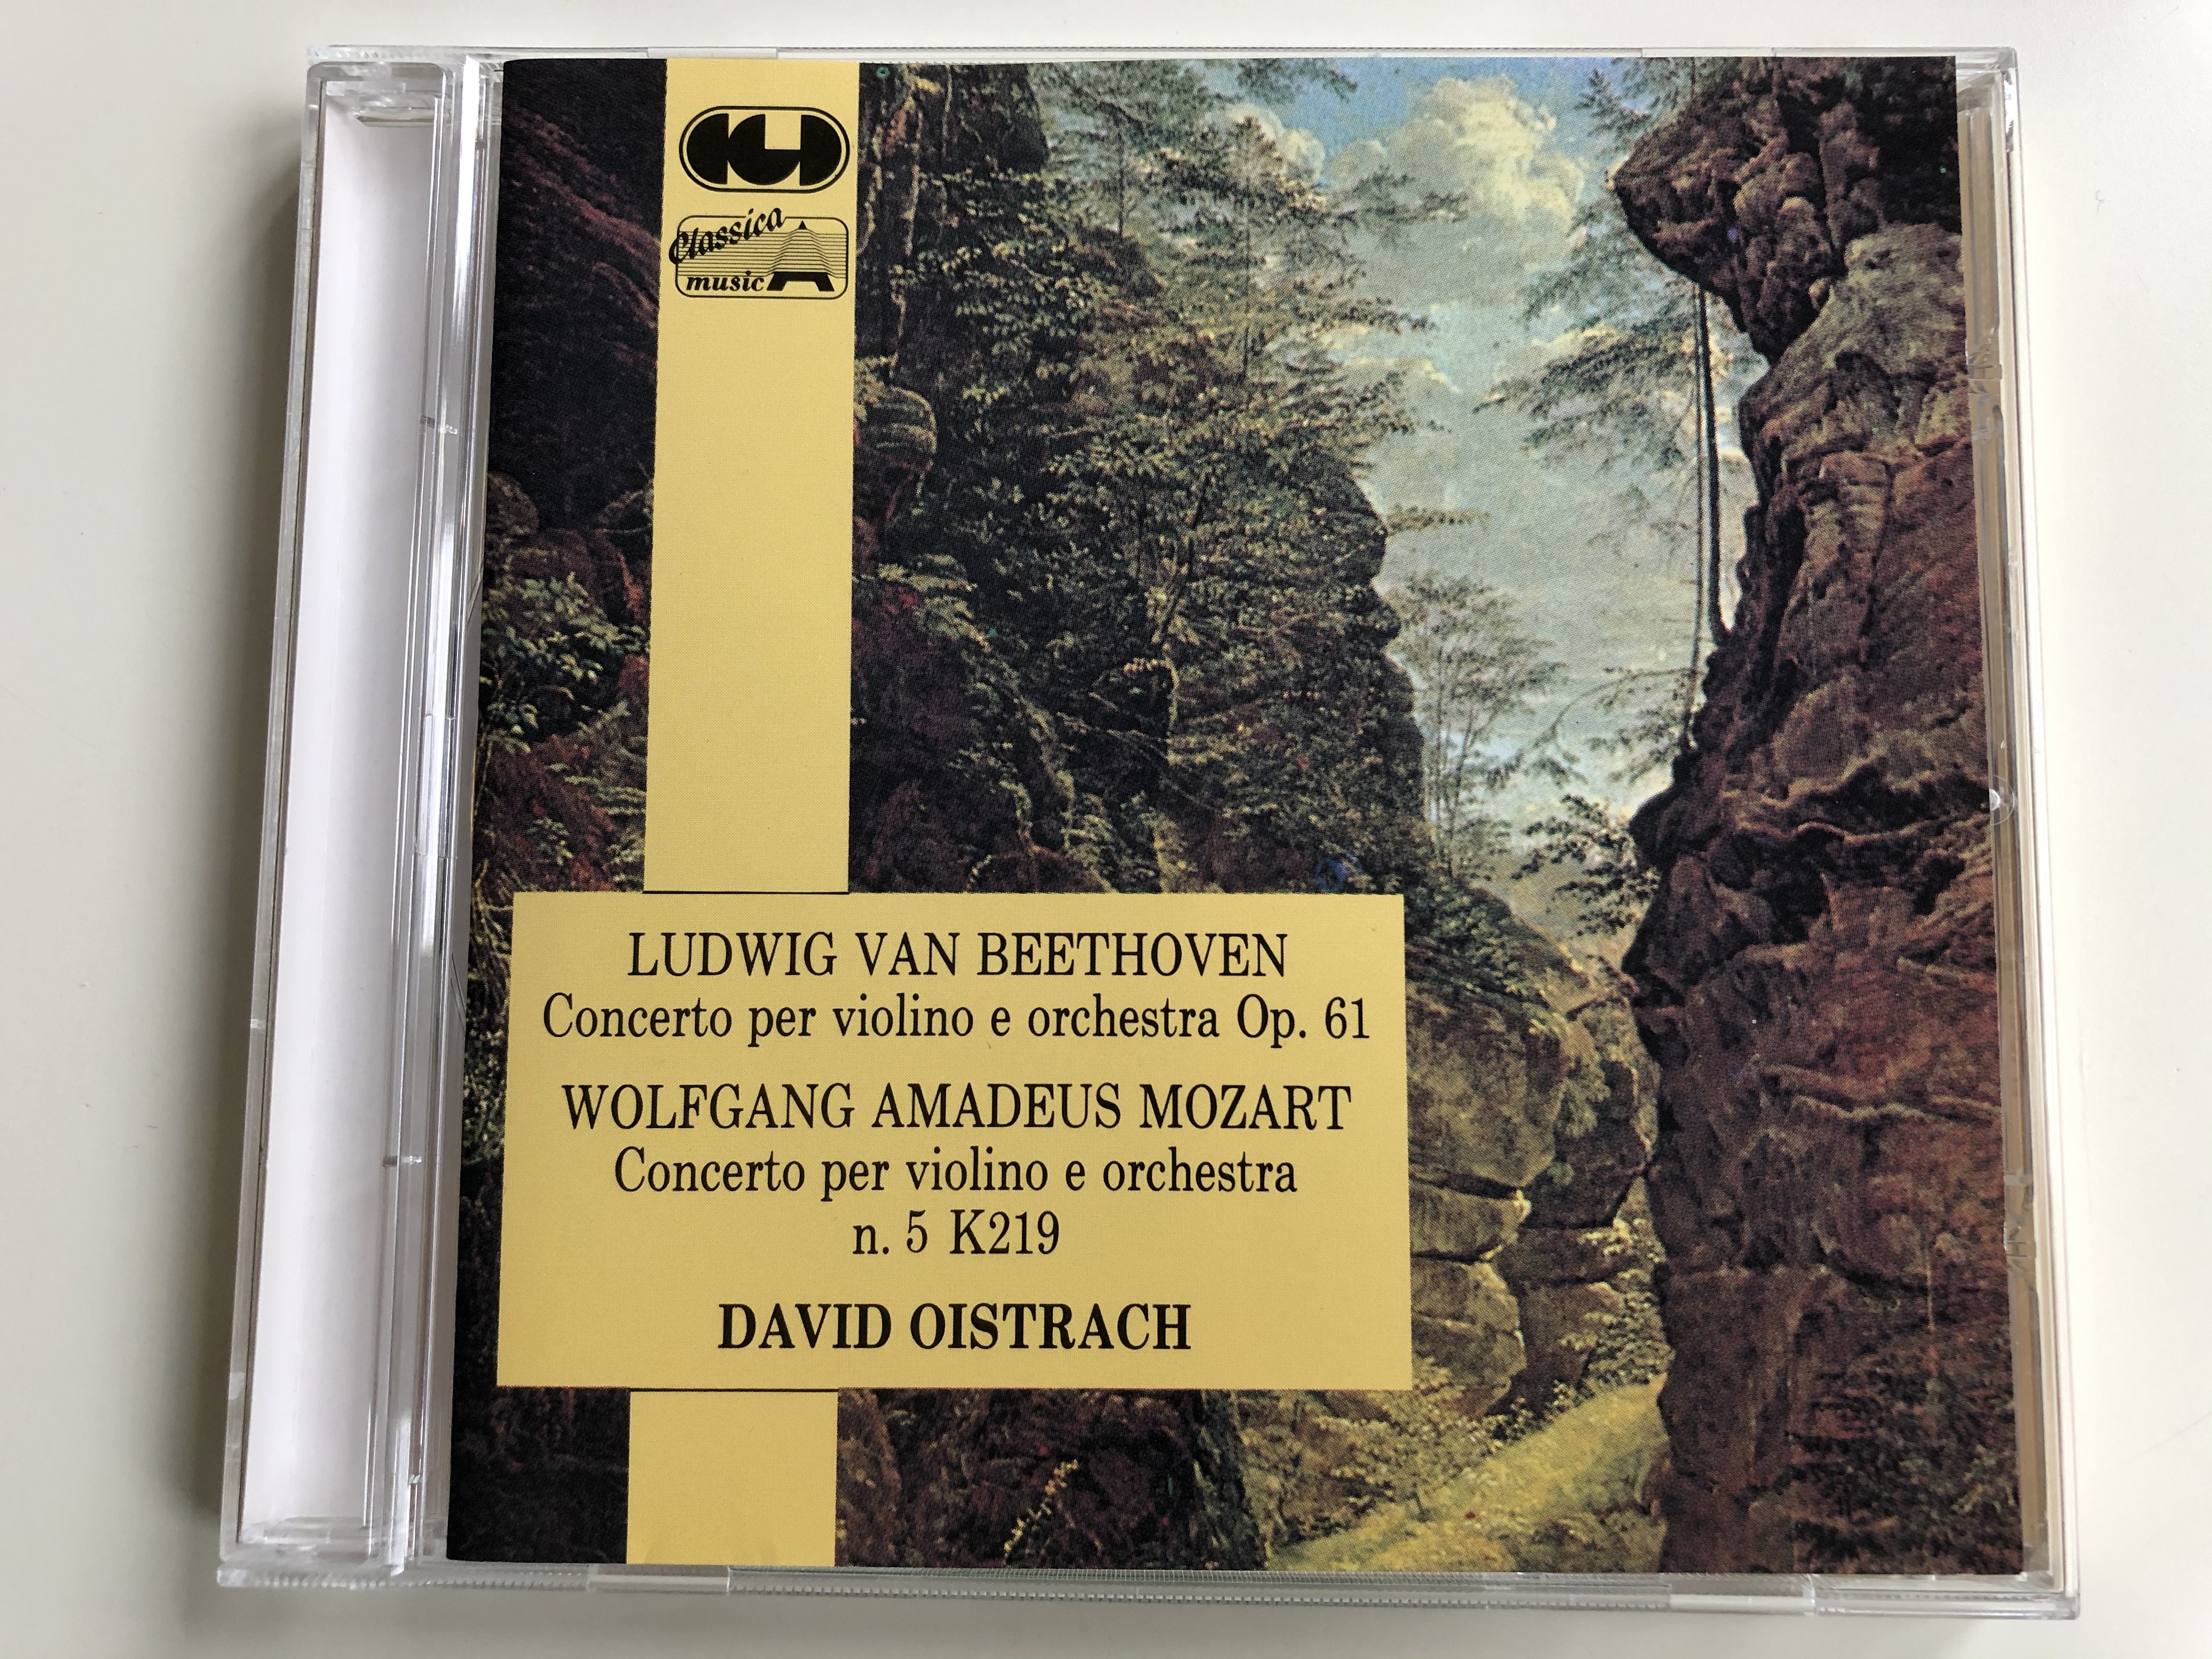 ludwig-van-beethoven-concerto-per-violino-e-orchestra-op.-61-wolfgang-amadeus-mozart-concerto-per-violino-e-orchestra-n.5-k219-david-oistrach-hunt-productions-audio-cd-1988-stereo-mono-cdl-1-.jpg